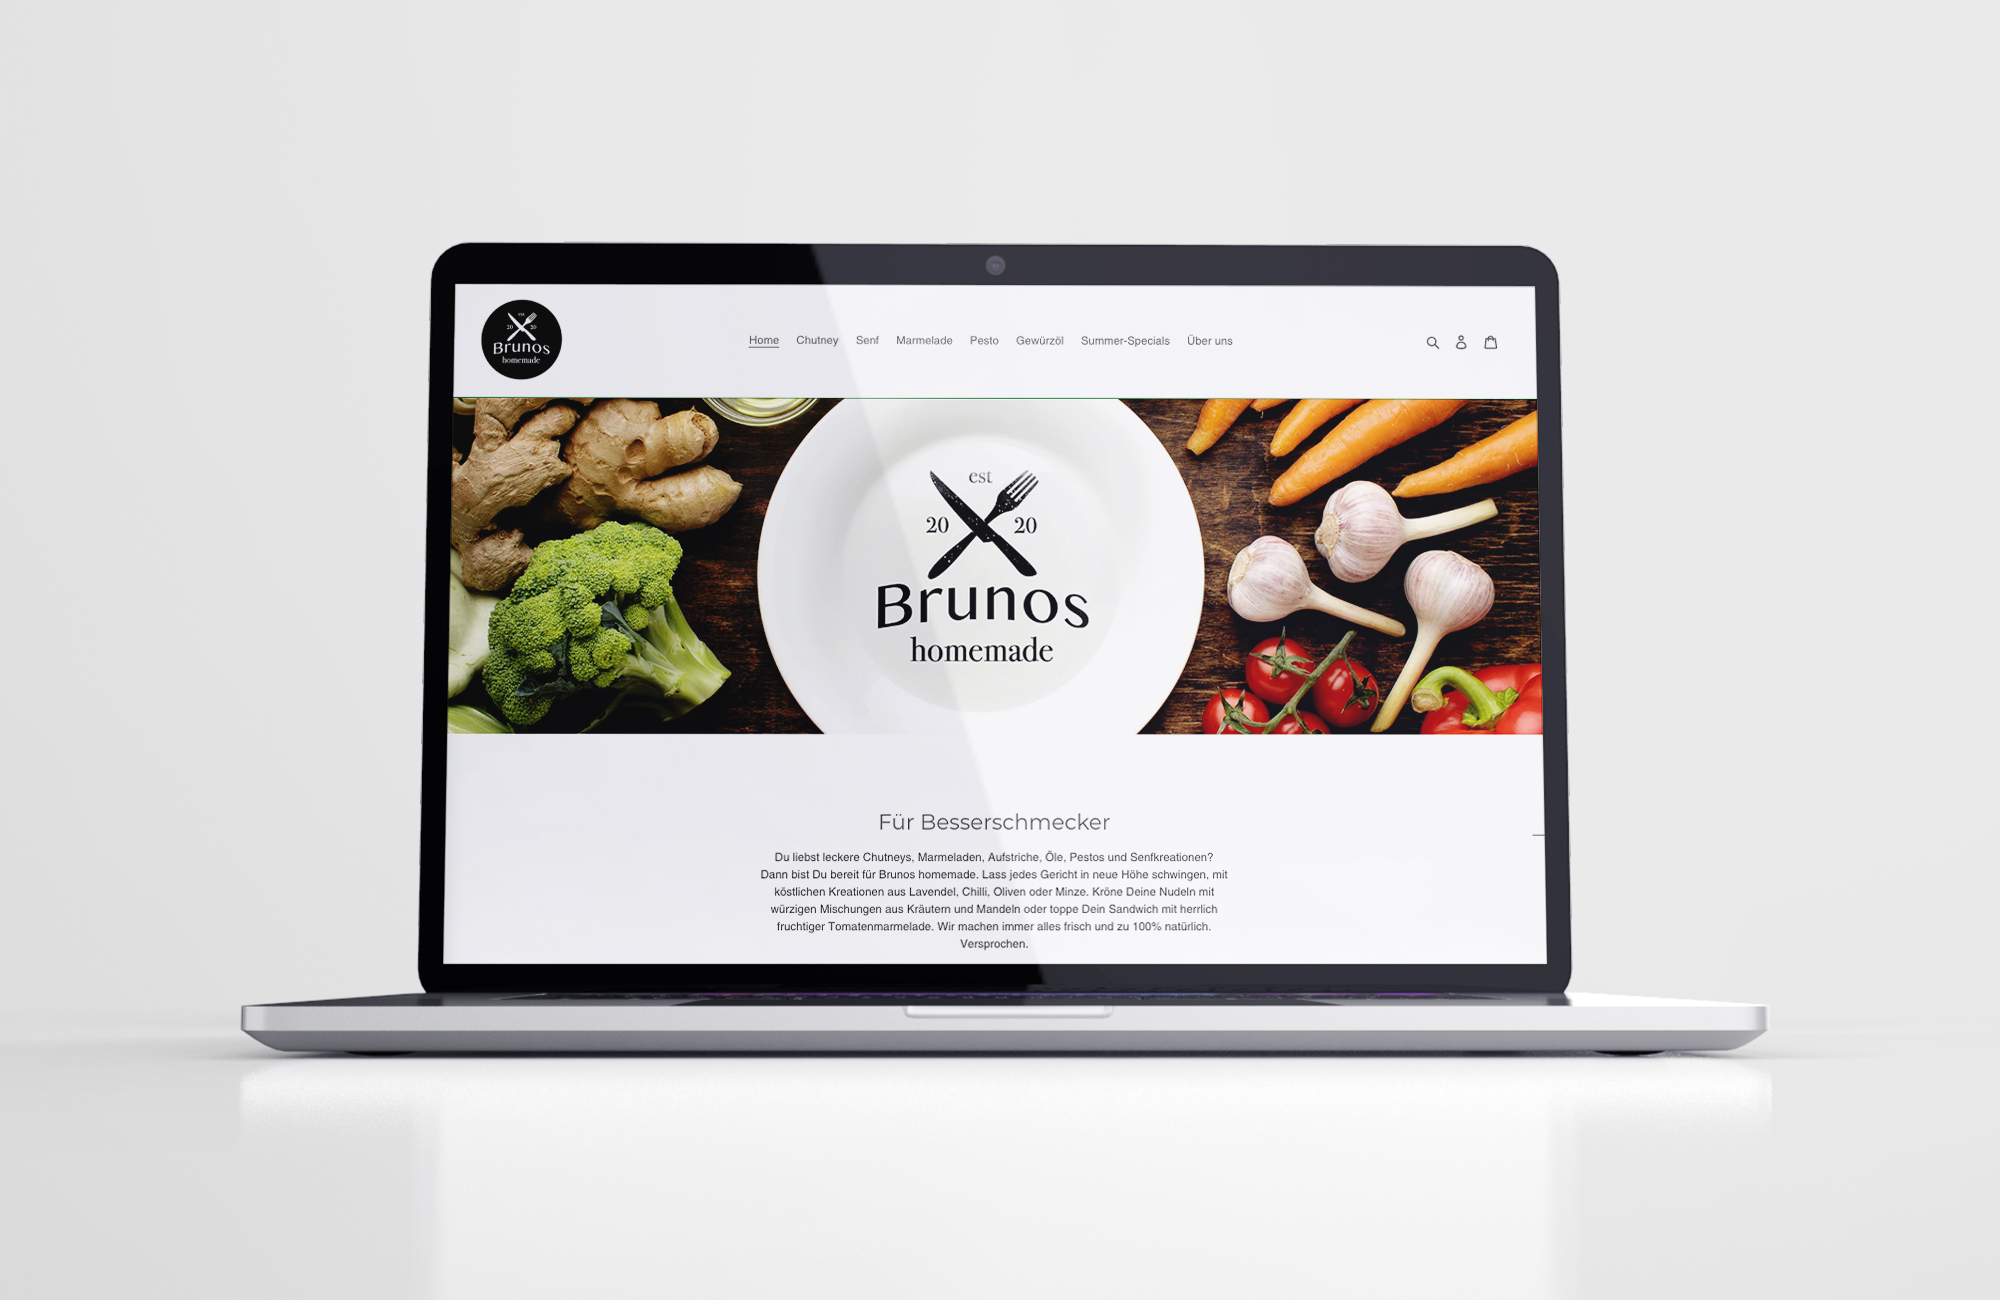 MacBook mit Brunos homemade Homepage